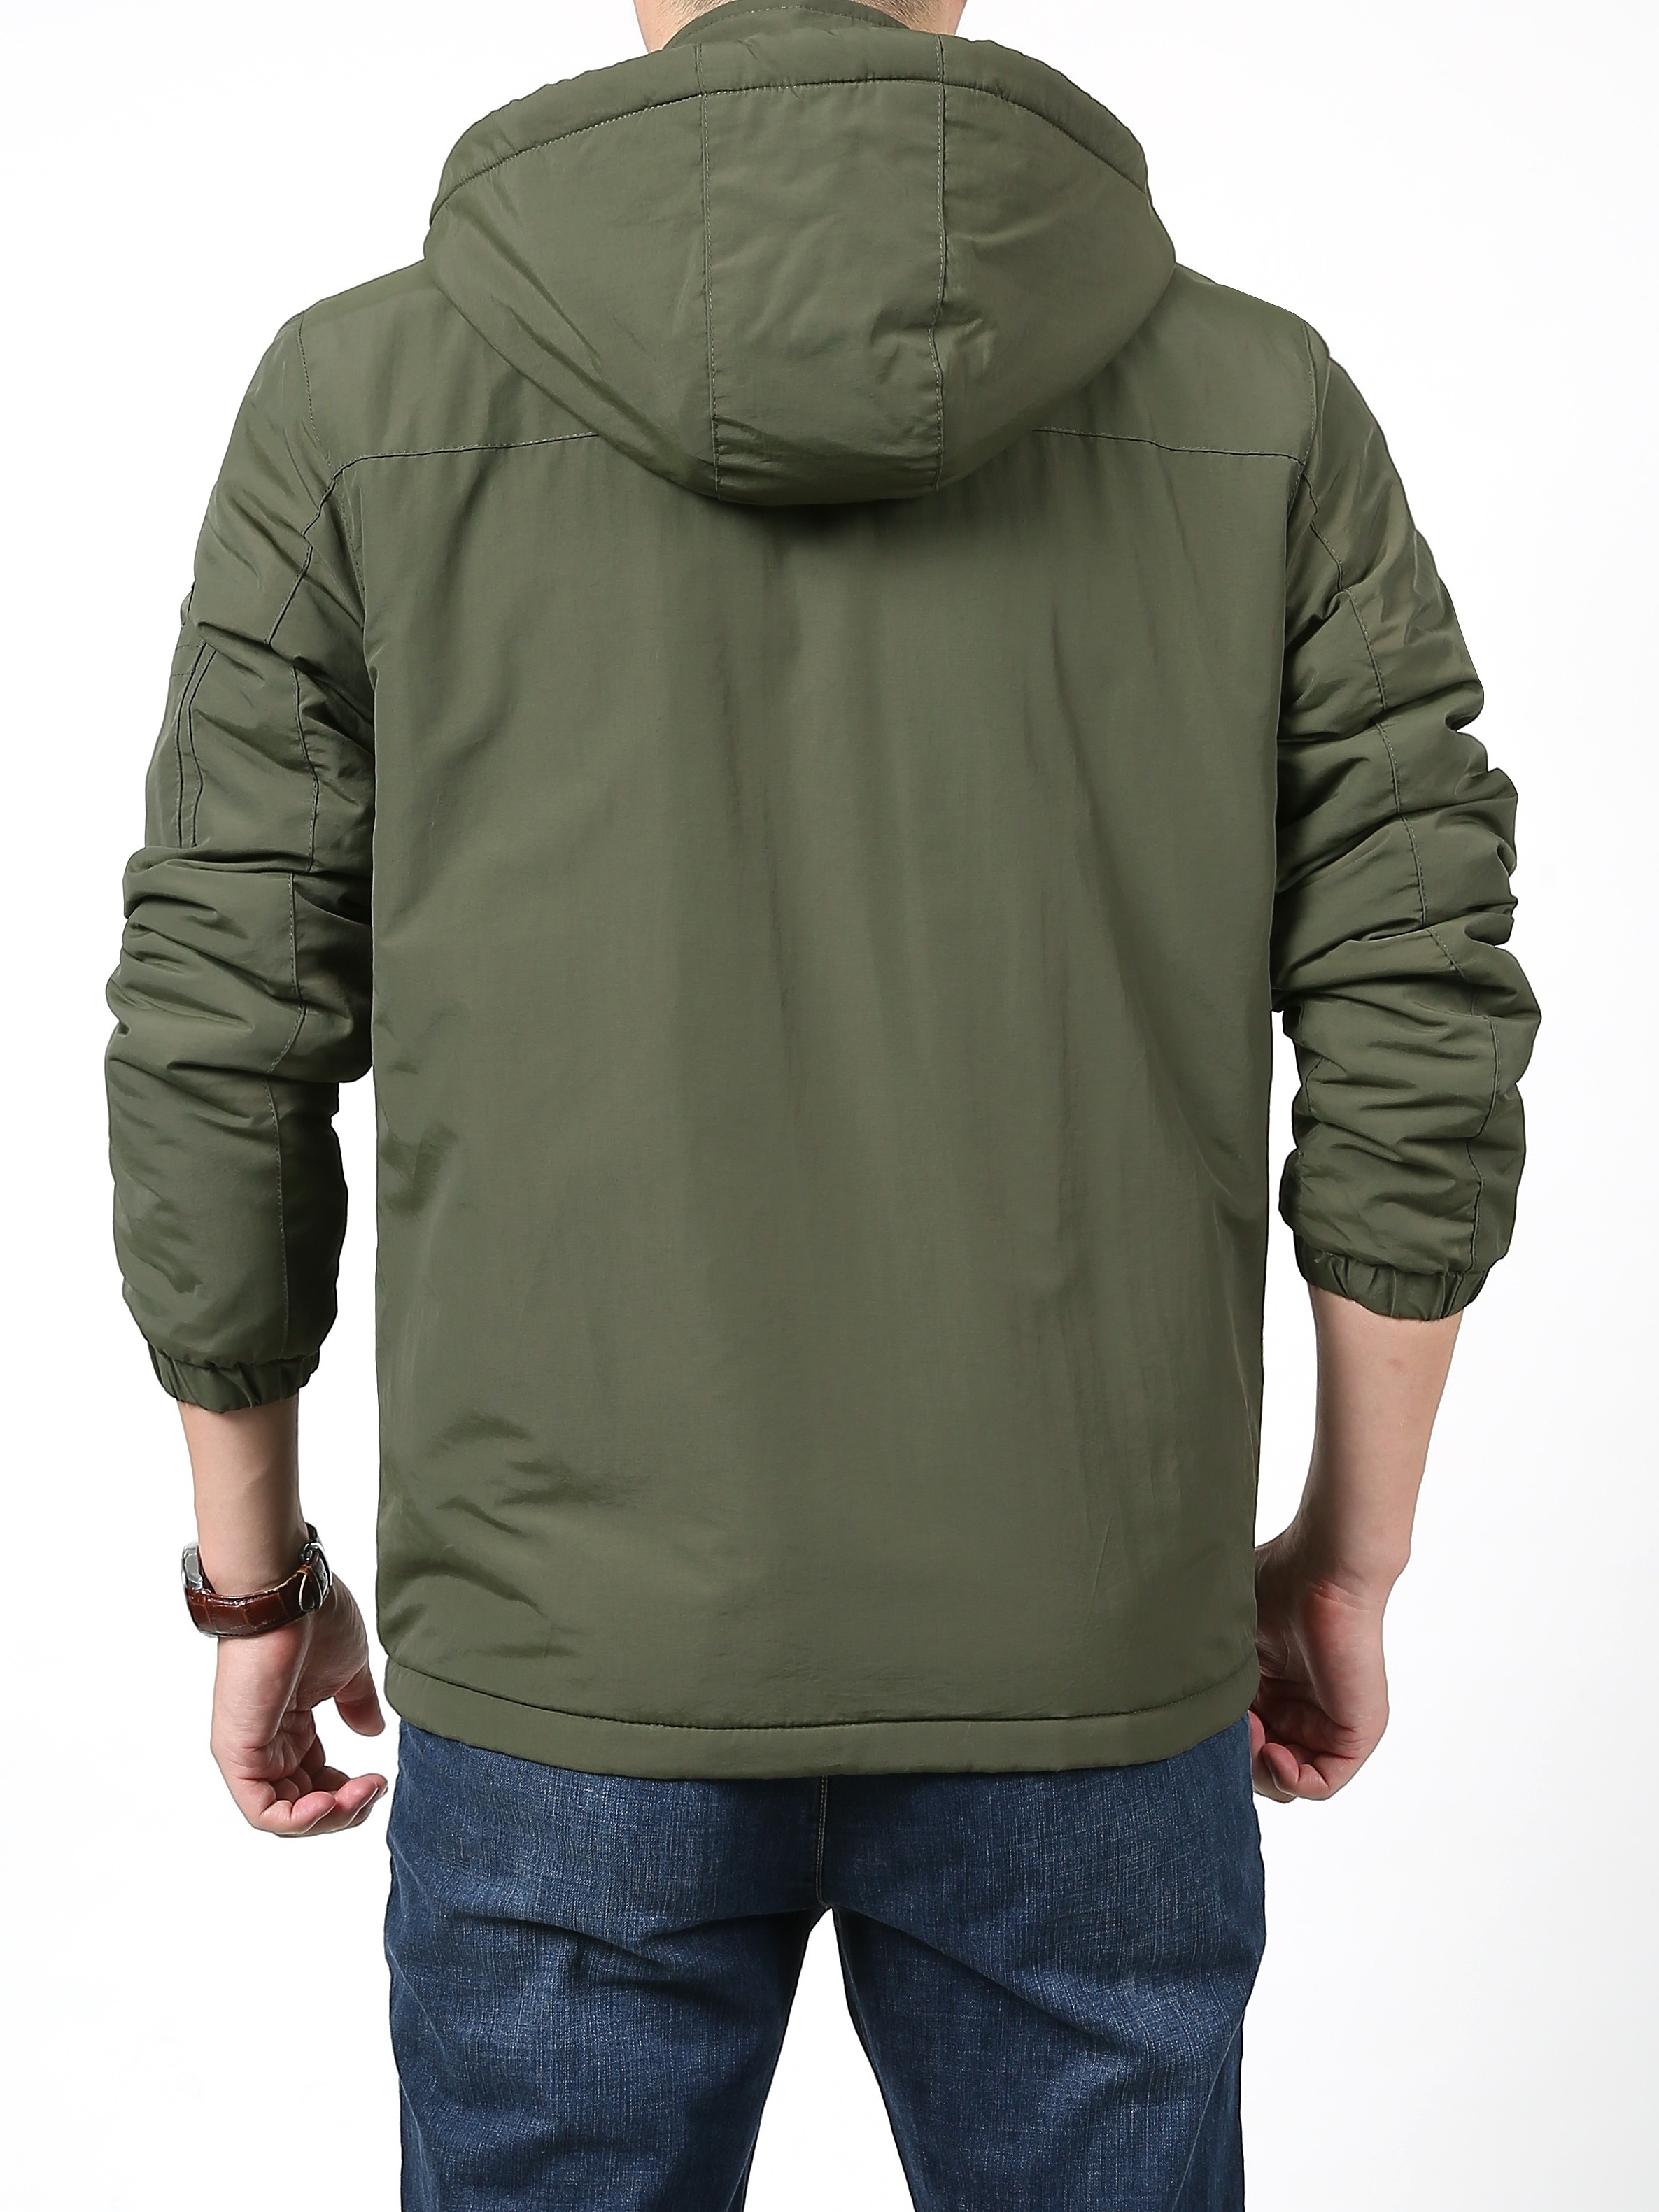 mens hooded jacket waterproof windproof comfy stylish thermal coats for mens outdoor activities